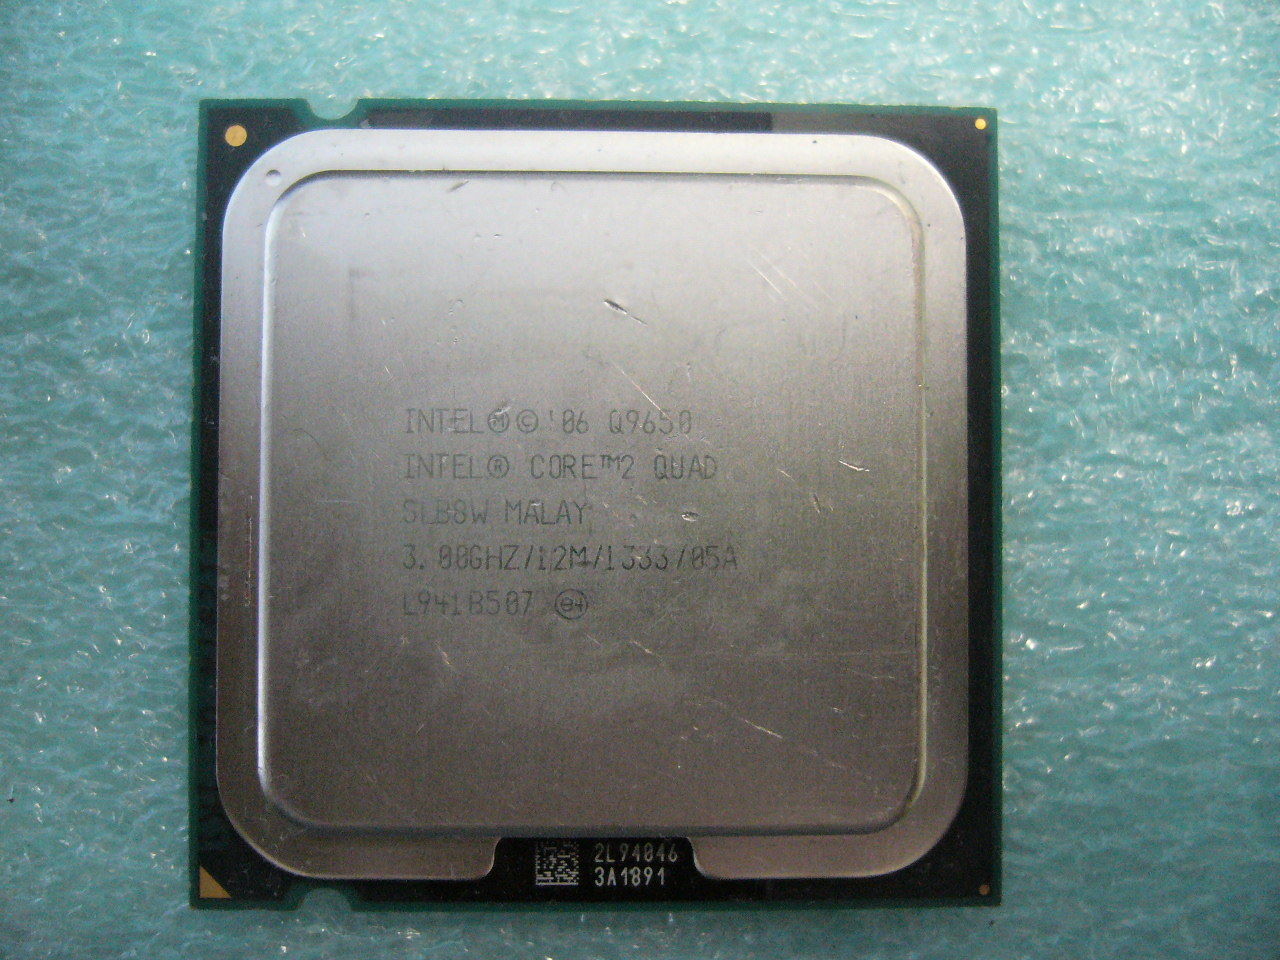 QTY 1x INTEL Core2 Quad Q9650 CPU 3.00GHz/12MB/1333Mhz LGA775 SLB8W - zum Schließen ins Bild klicken